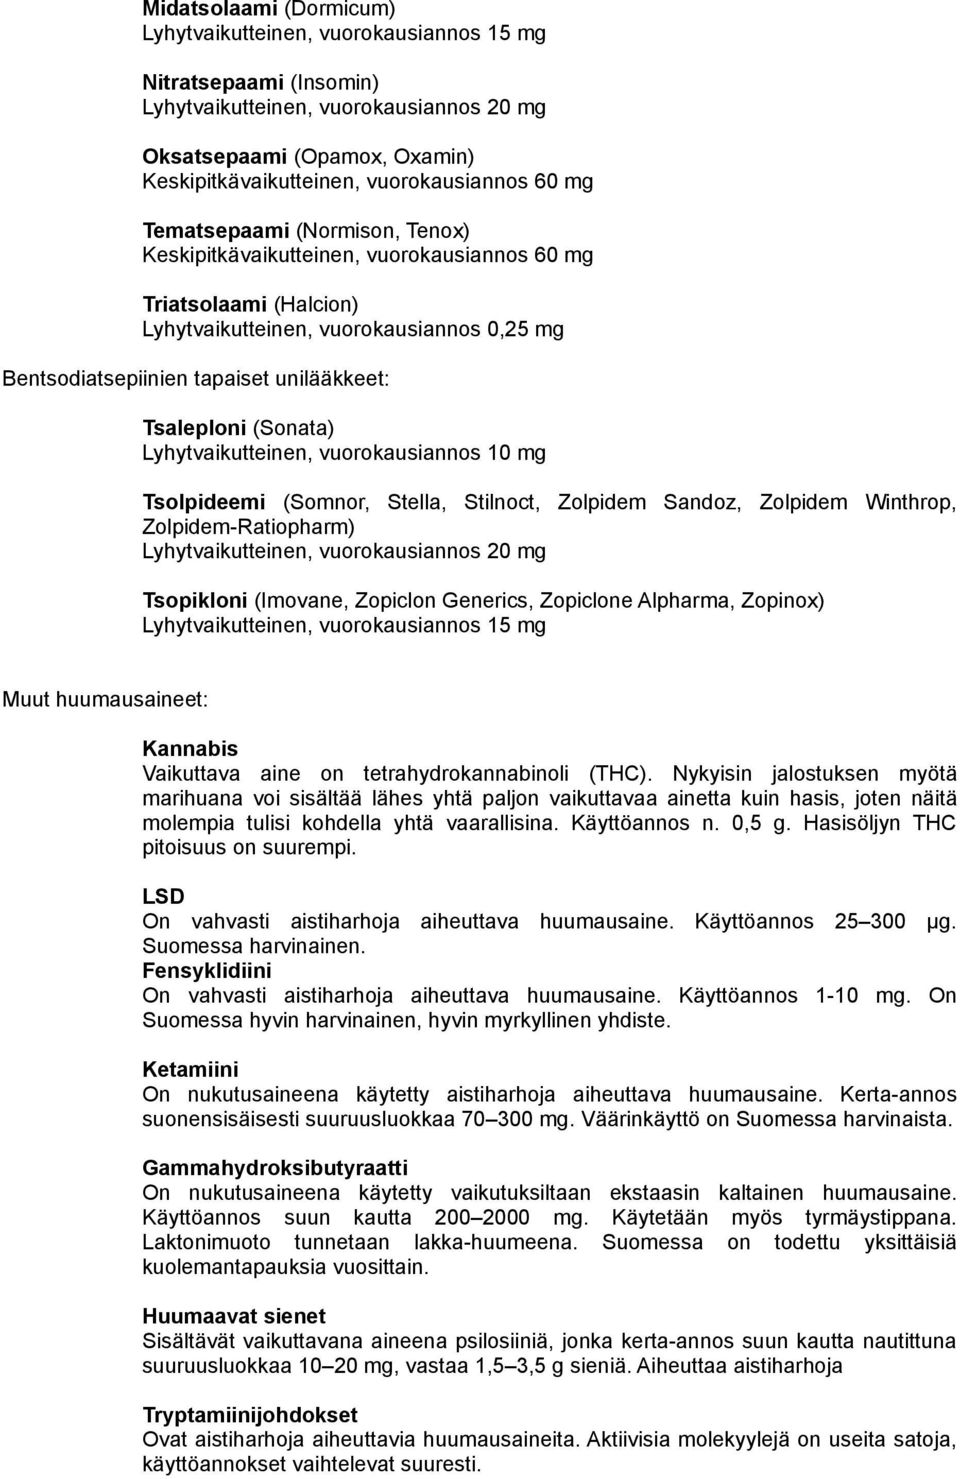 Tsaleploni (Sonata) Lyhytvaikutteinen, vuorokausiannos 10 mg Tsolpideemi (Somnor, Stella, Stilnoct, Zolpidem Sandoz, Zolpidem Winthrop, Zolpidem-Ratiopharm) Lyhytvaikutteinen, vuorokausiannos 20 mg